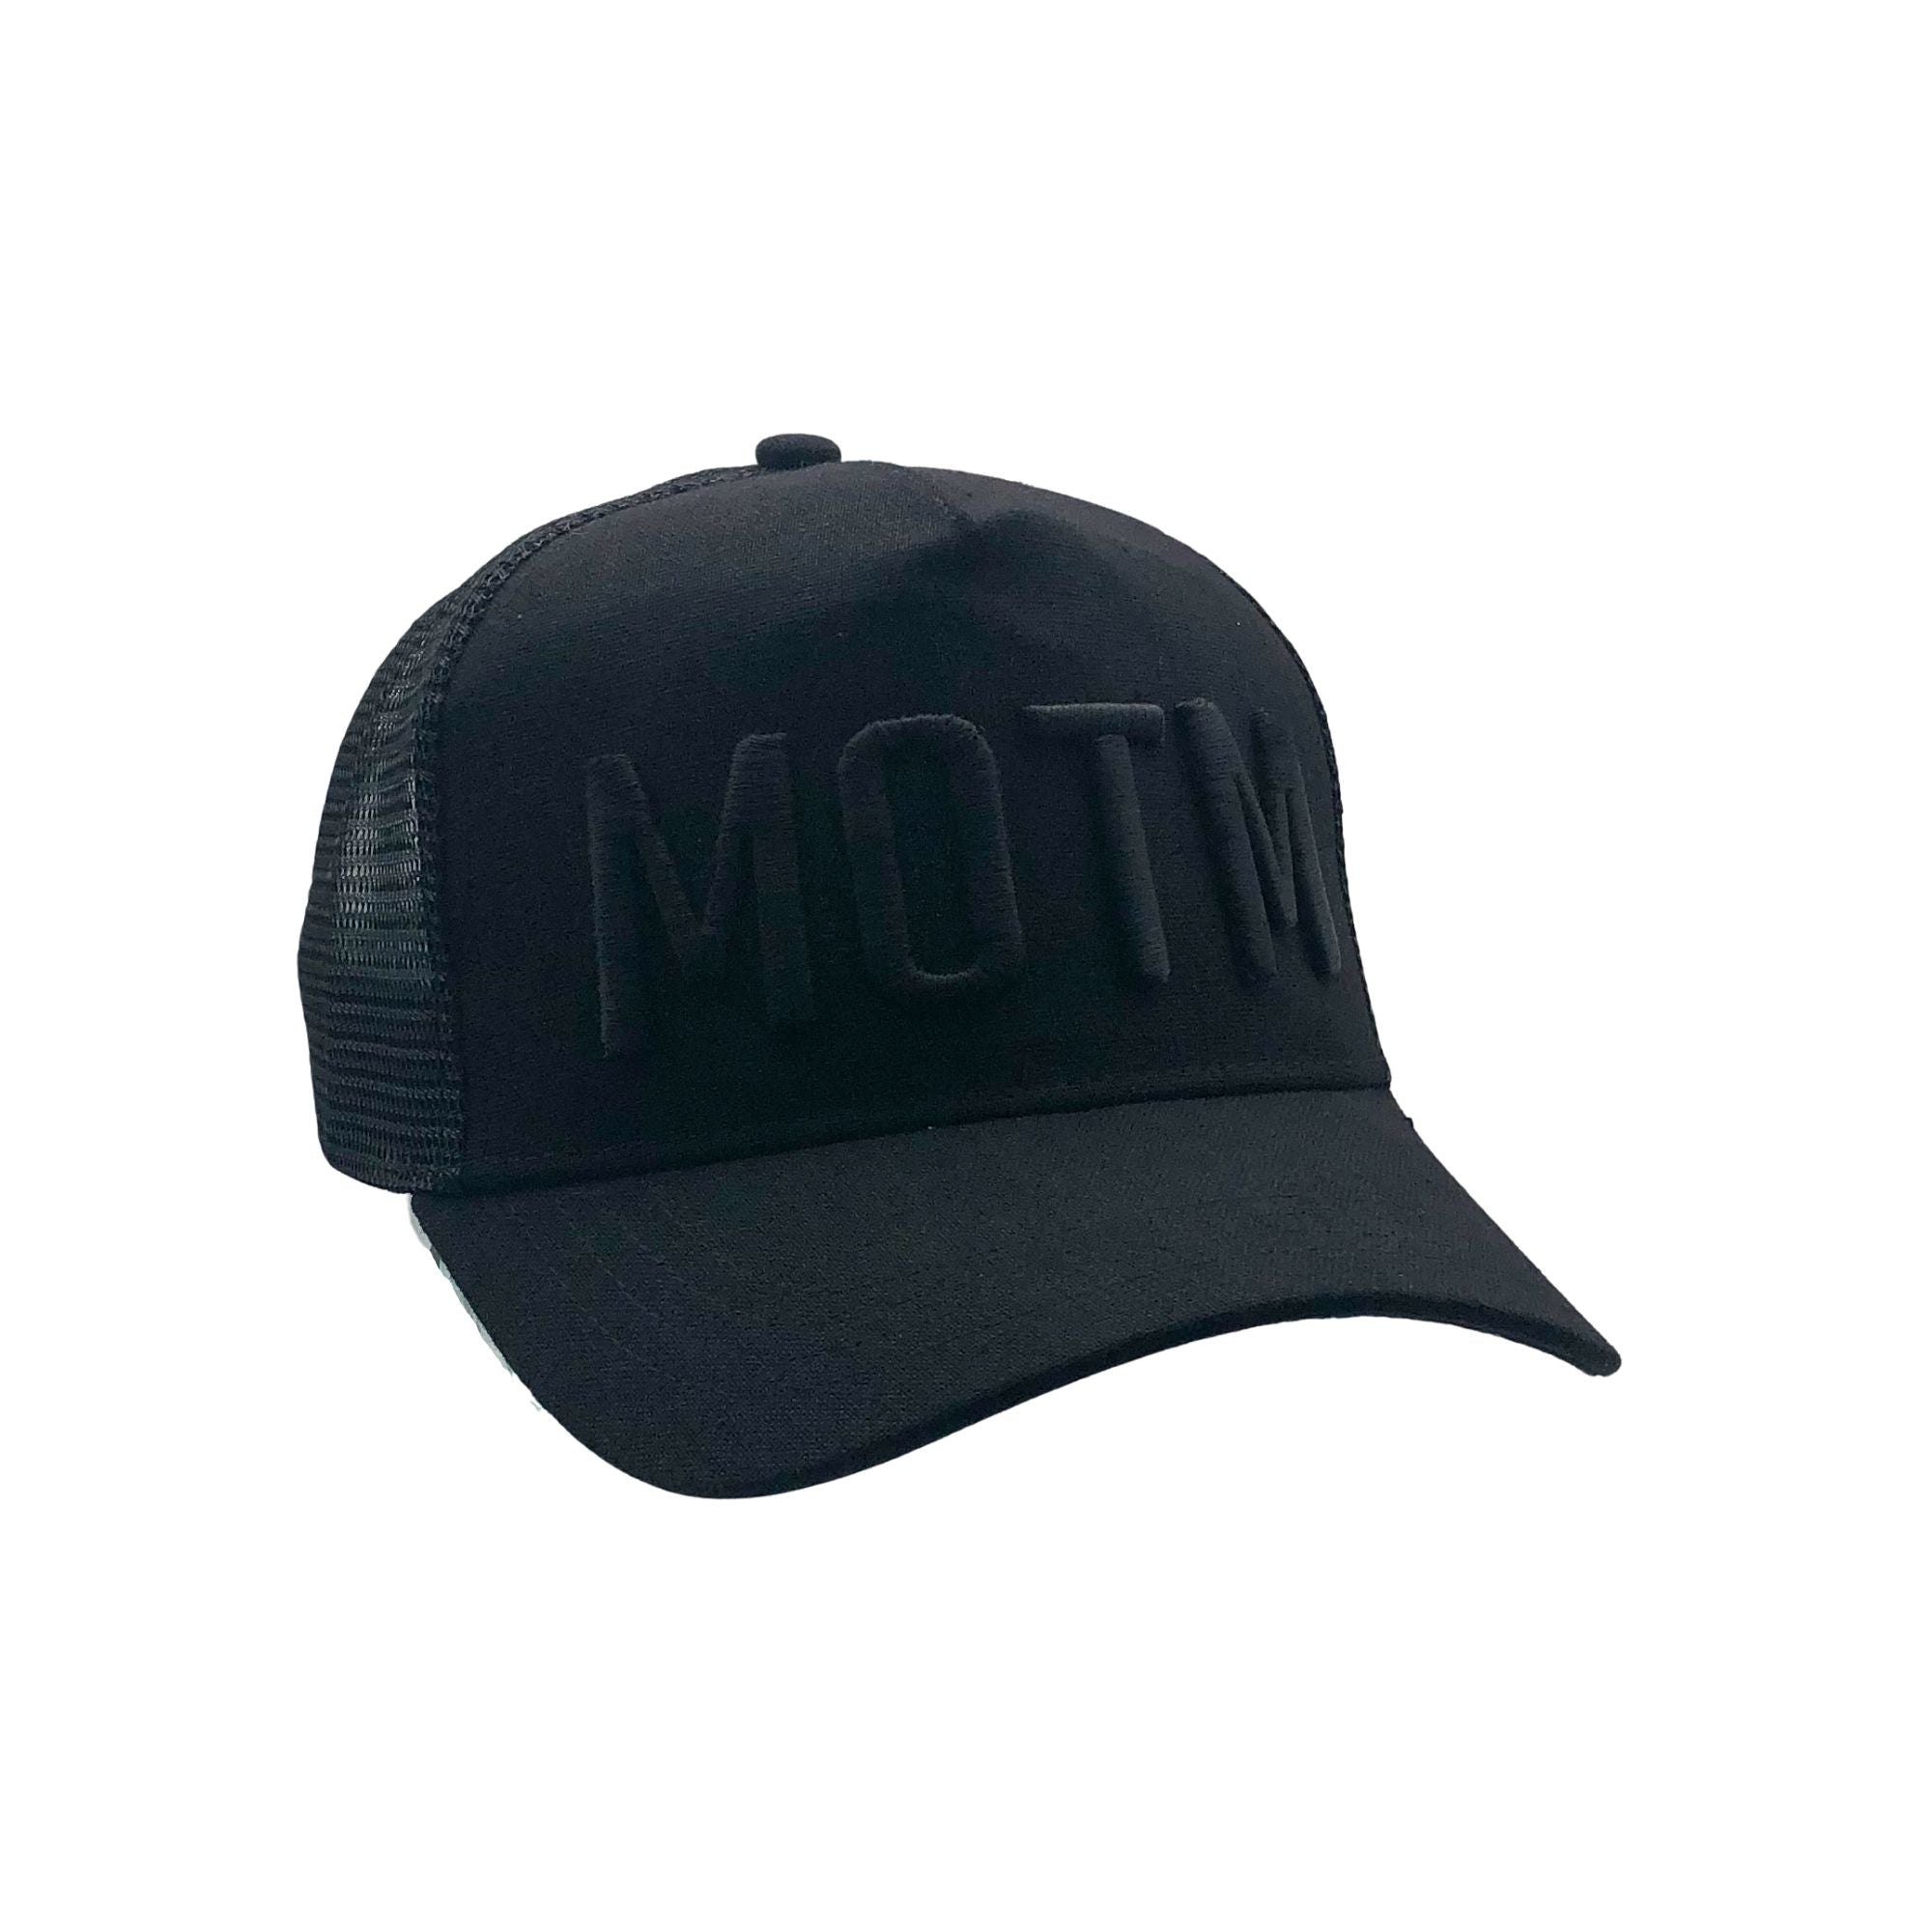 MAN OF THE MATCH® Official Cap - MOTM 3D Embroidered Black on Black - Premium Linen